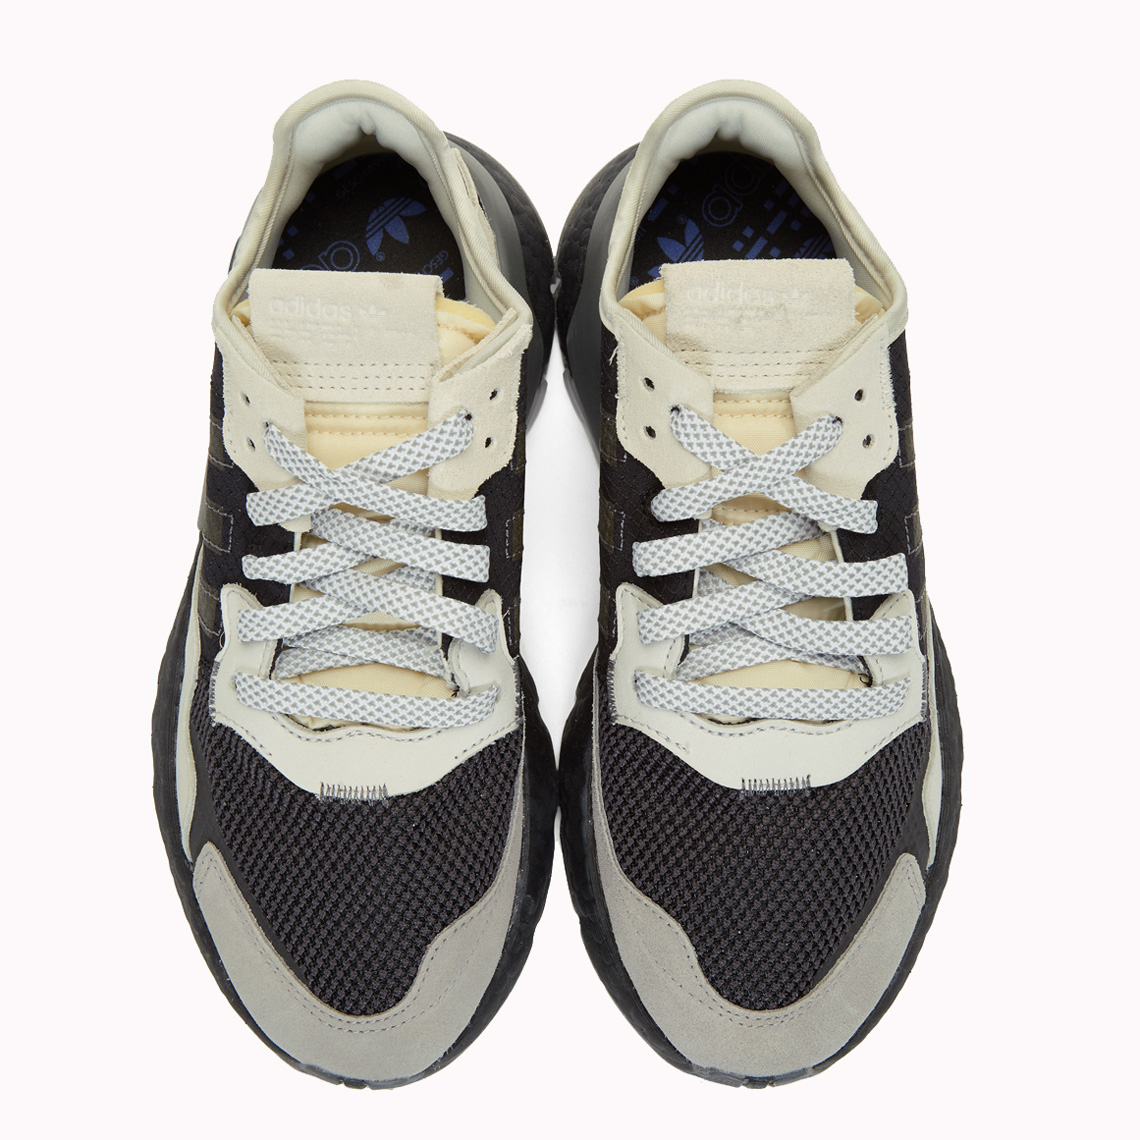 adidas Nite Jogger Grey Black Release Info | SneakerNews.com